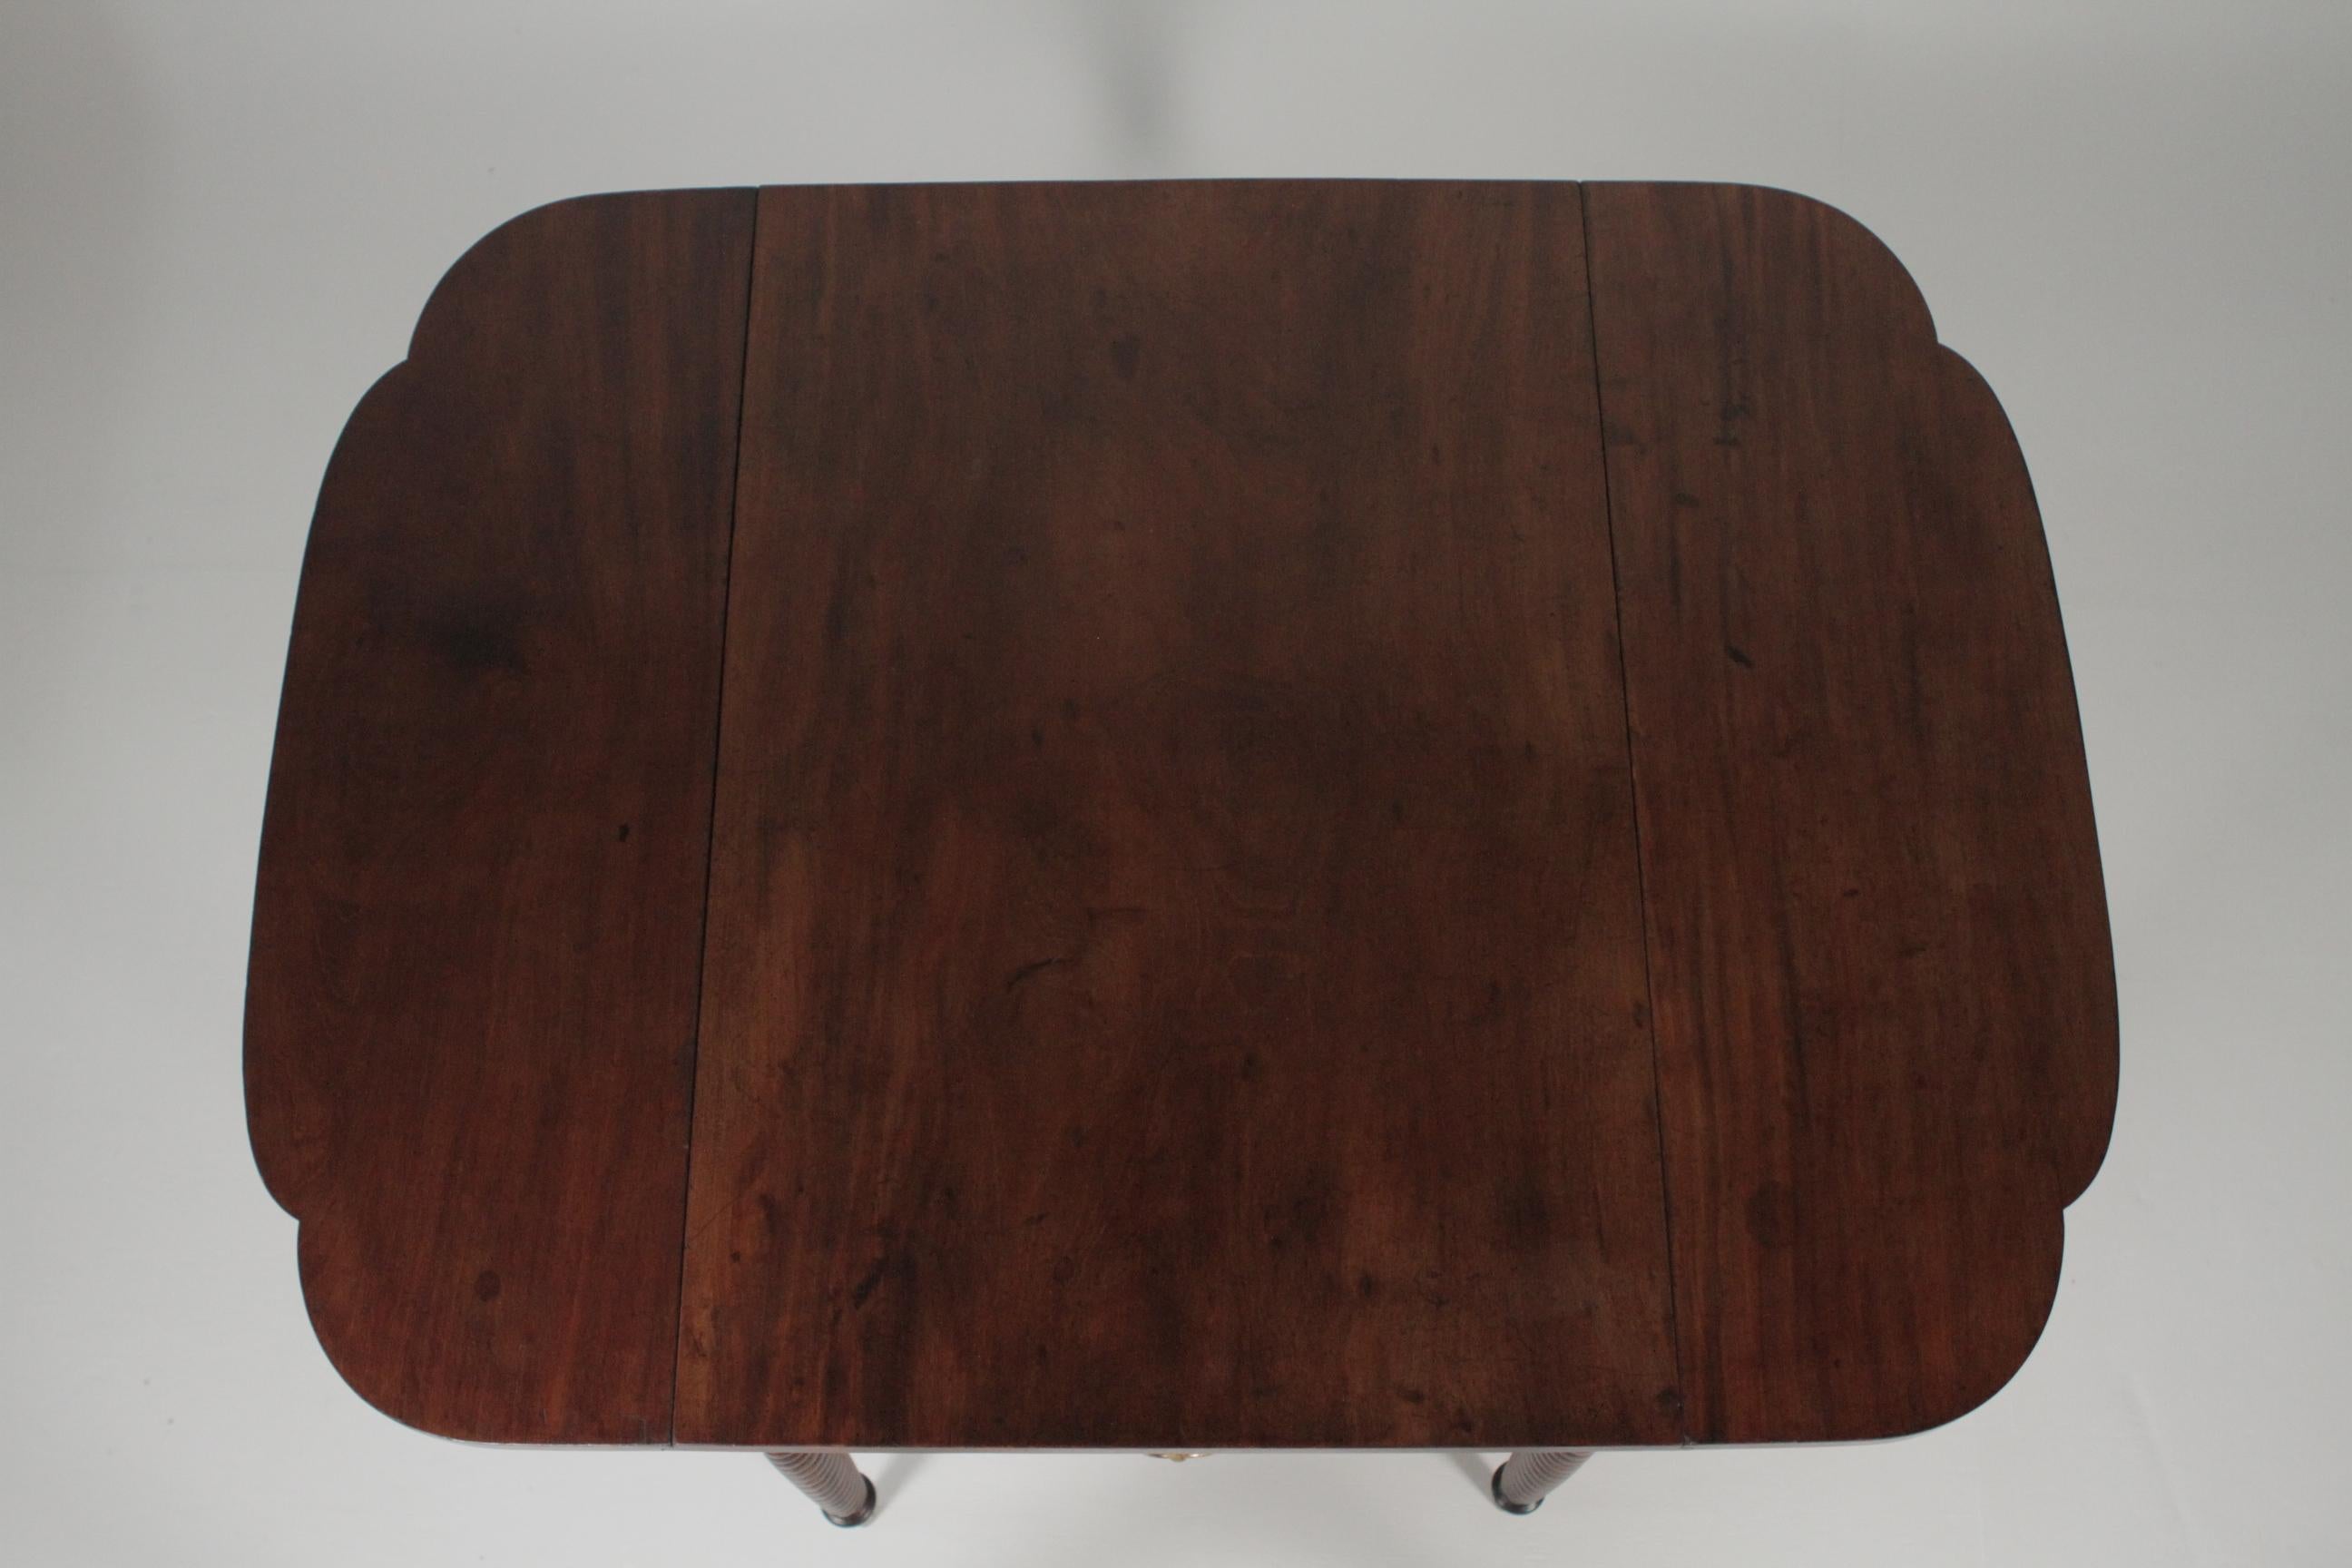 Sheraton mahogany twist leg drop-leaf table with one drawer. Dimensions: 38” D x 26.5” W, circa 1820-1840.
50.5 W open x 29” H.